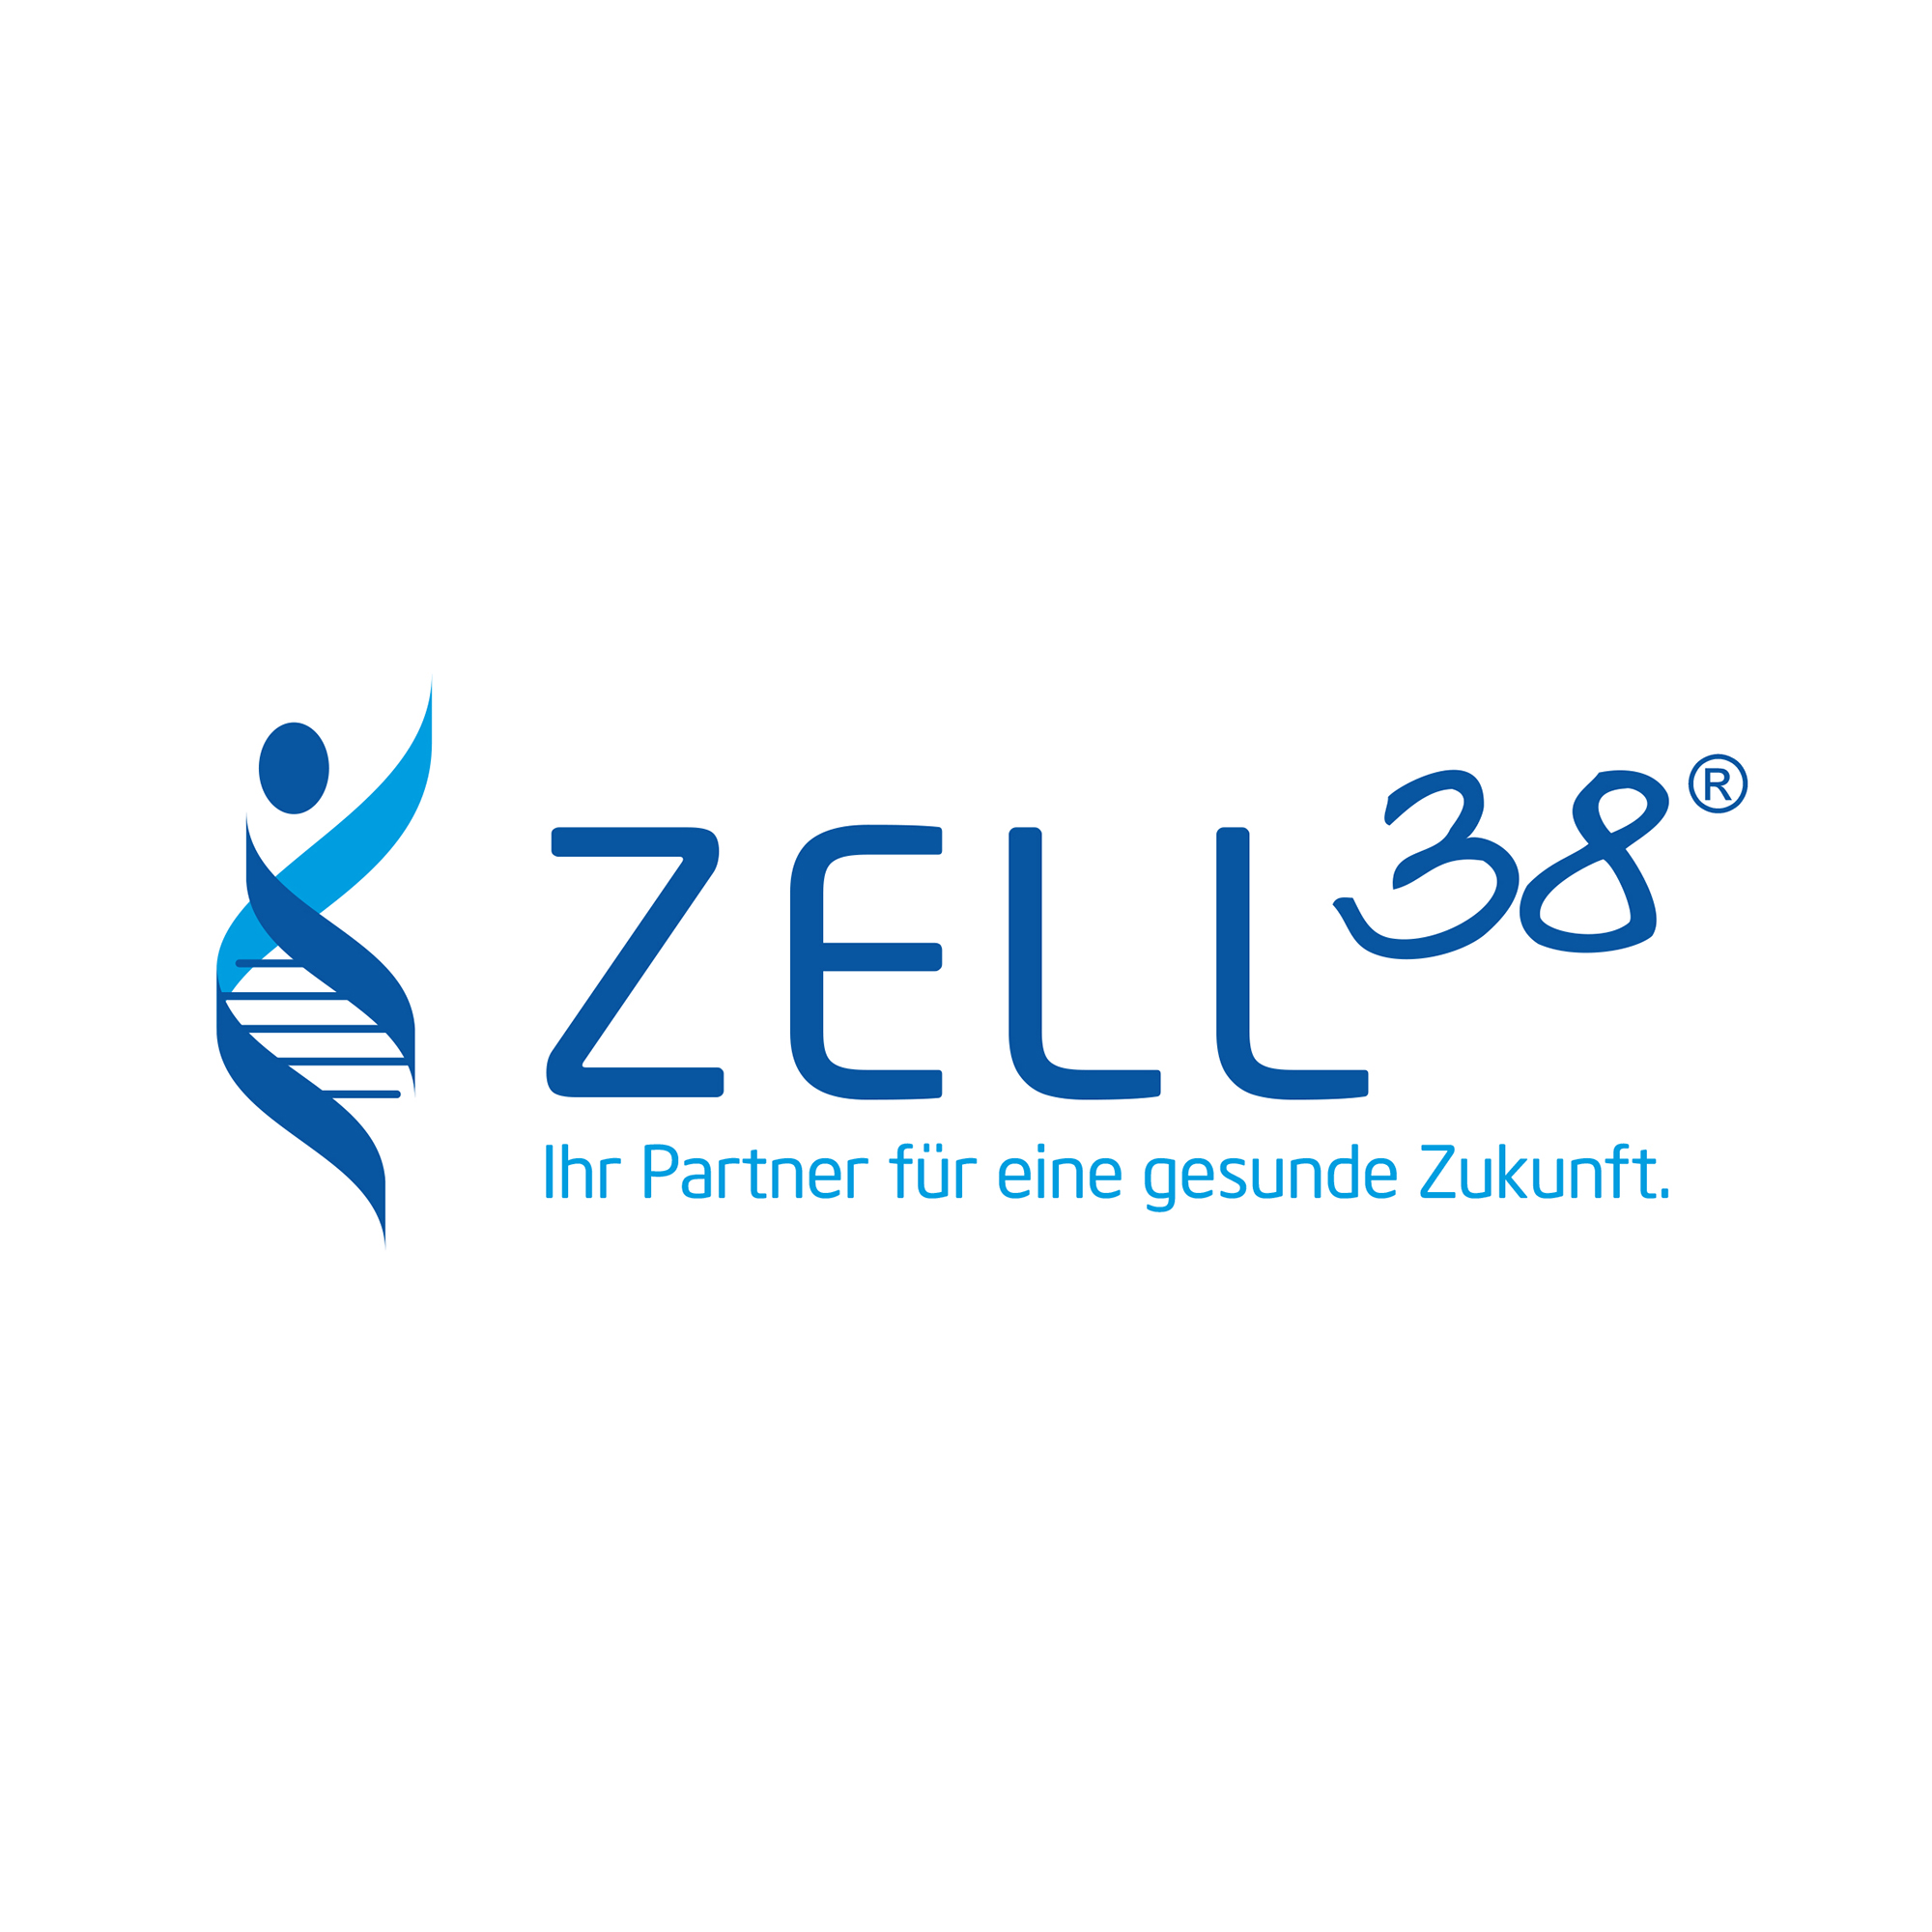 Zell38 GmbH